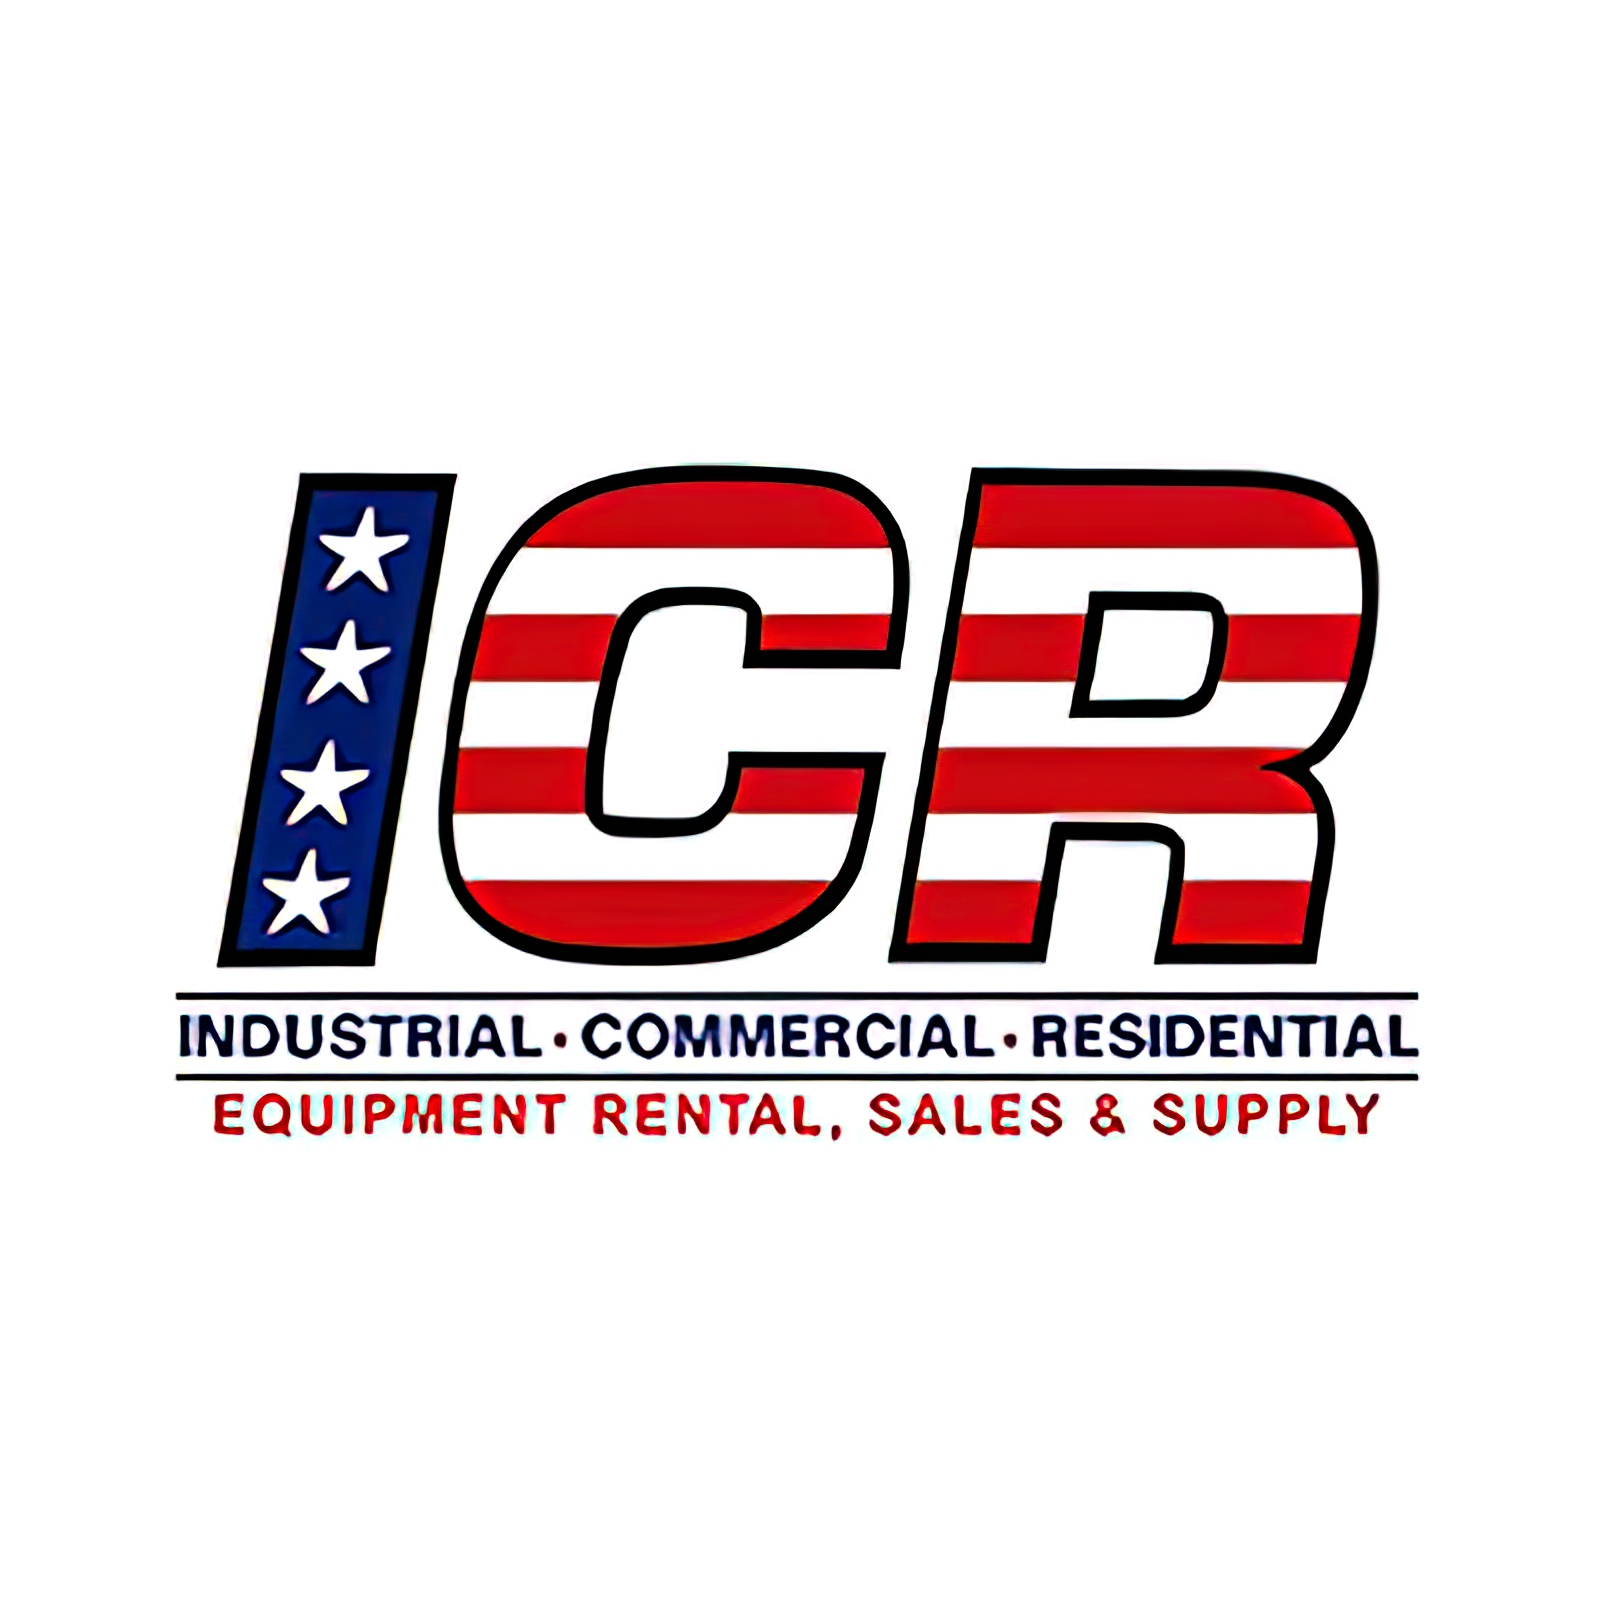 ICR Equipment Rental, Sales & Supply logo